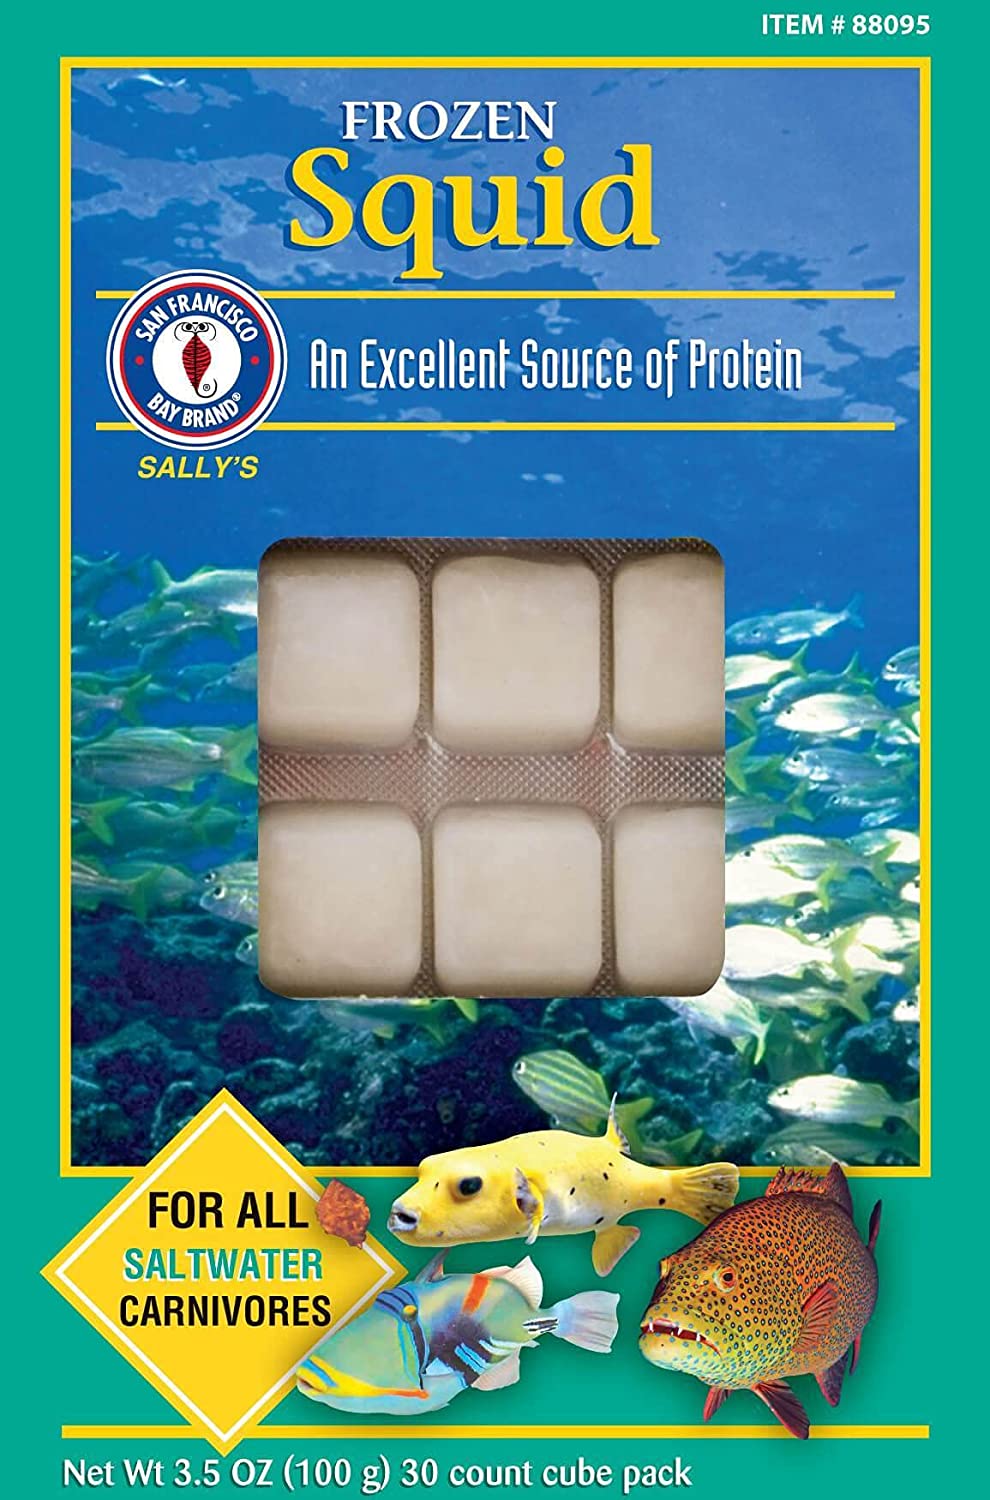 San Francisco Bay Brand Frozen Squid - 30 Cubes - 3.5 oz  